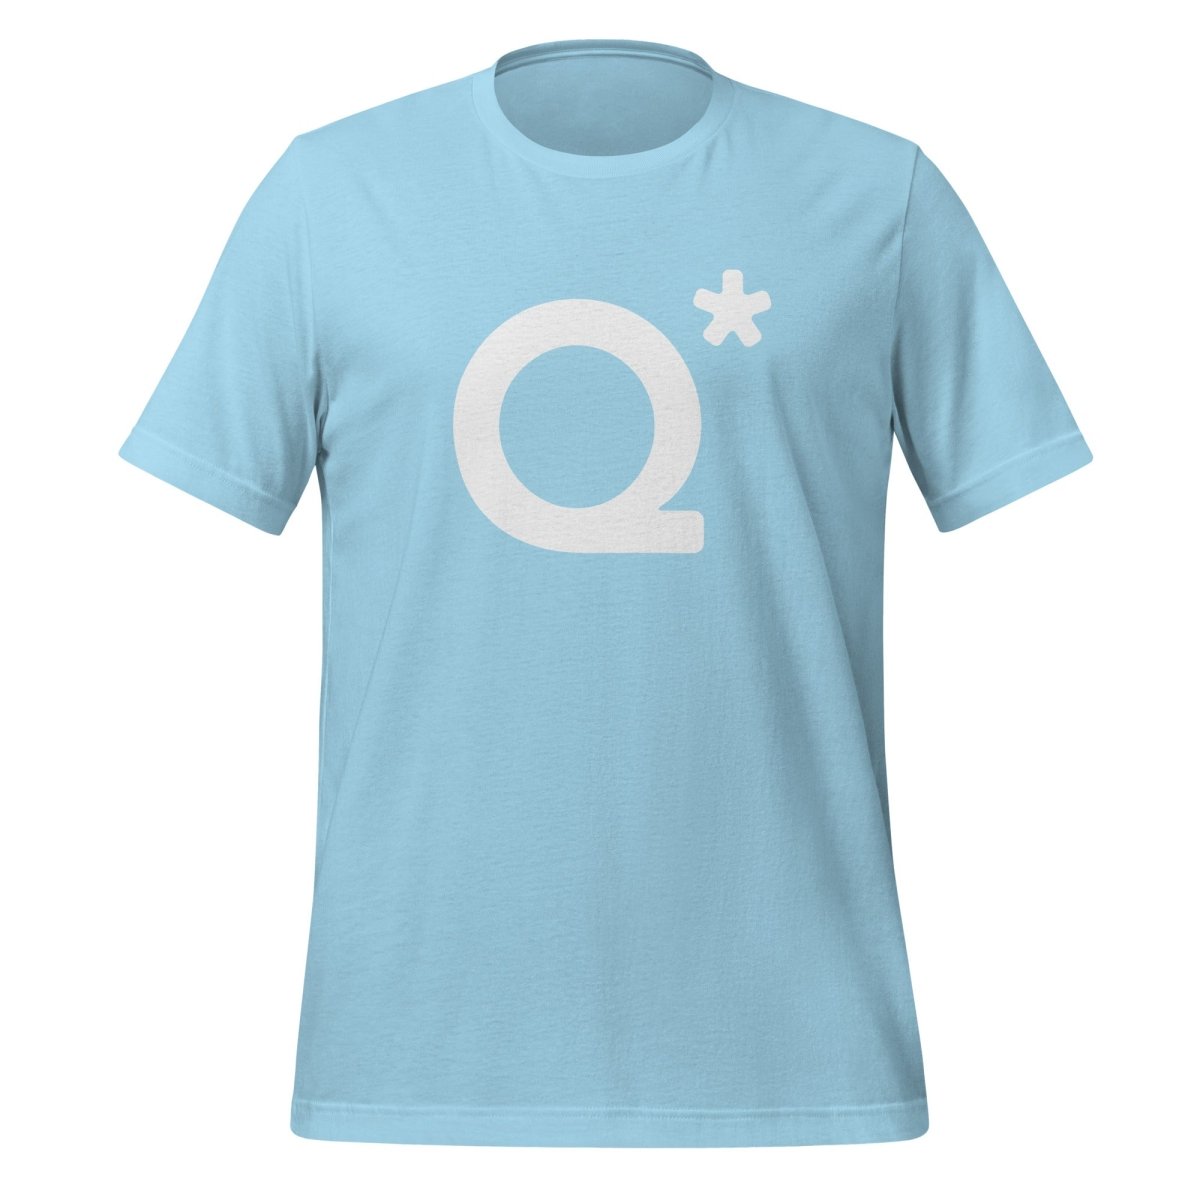 Q* (Q-Star) T-Shirt 1 (unisex) - AI Store